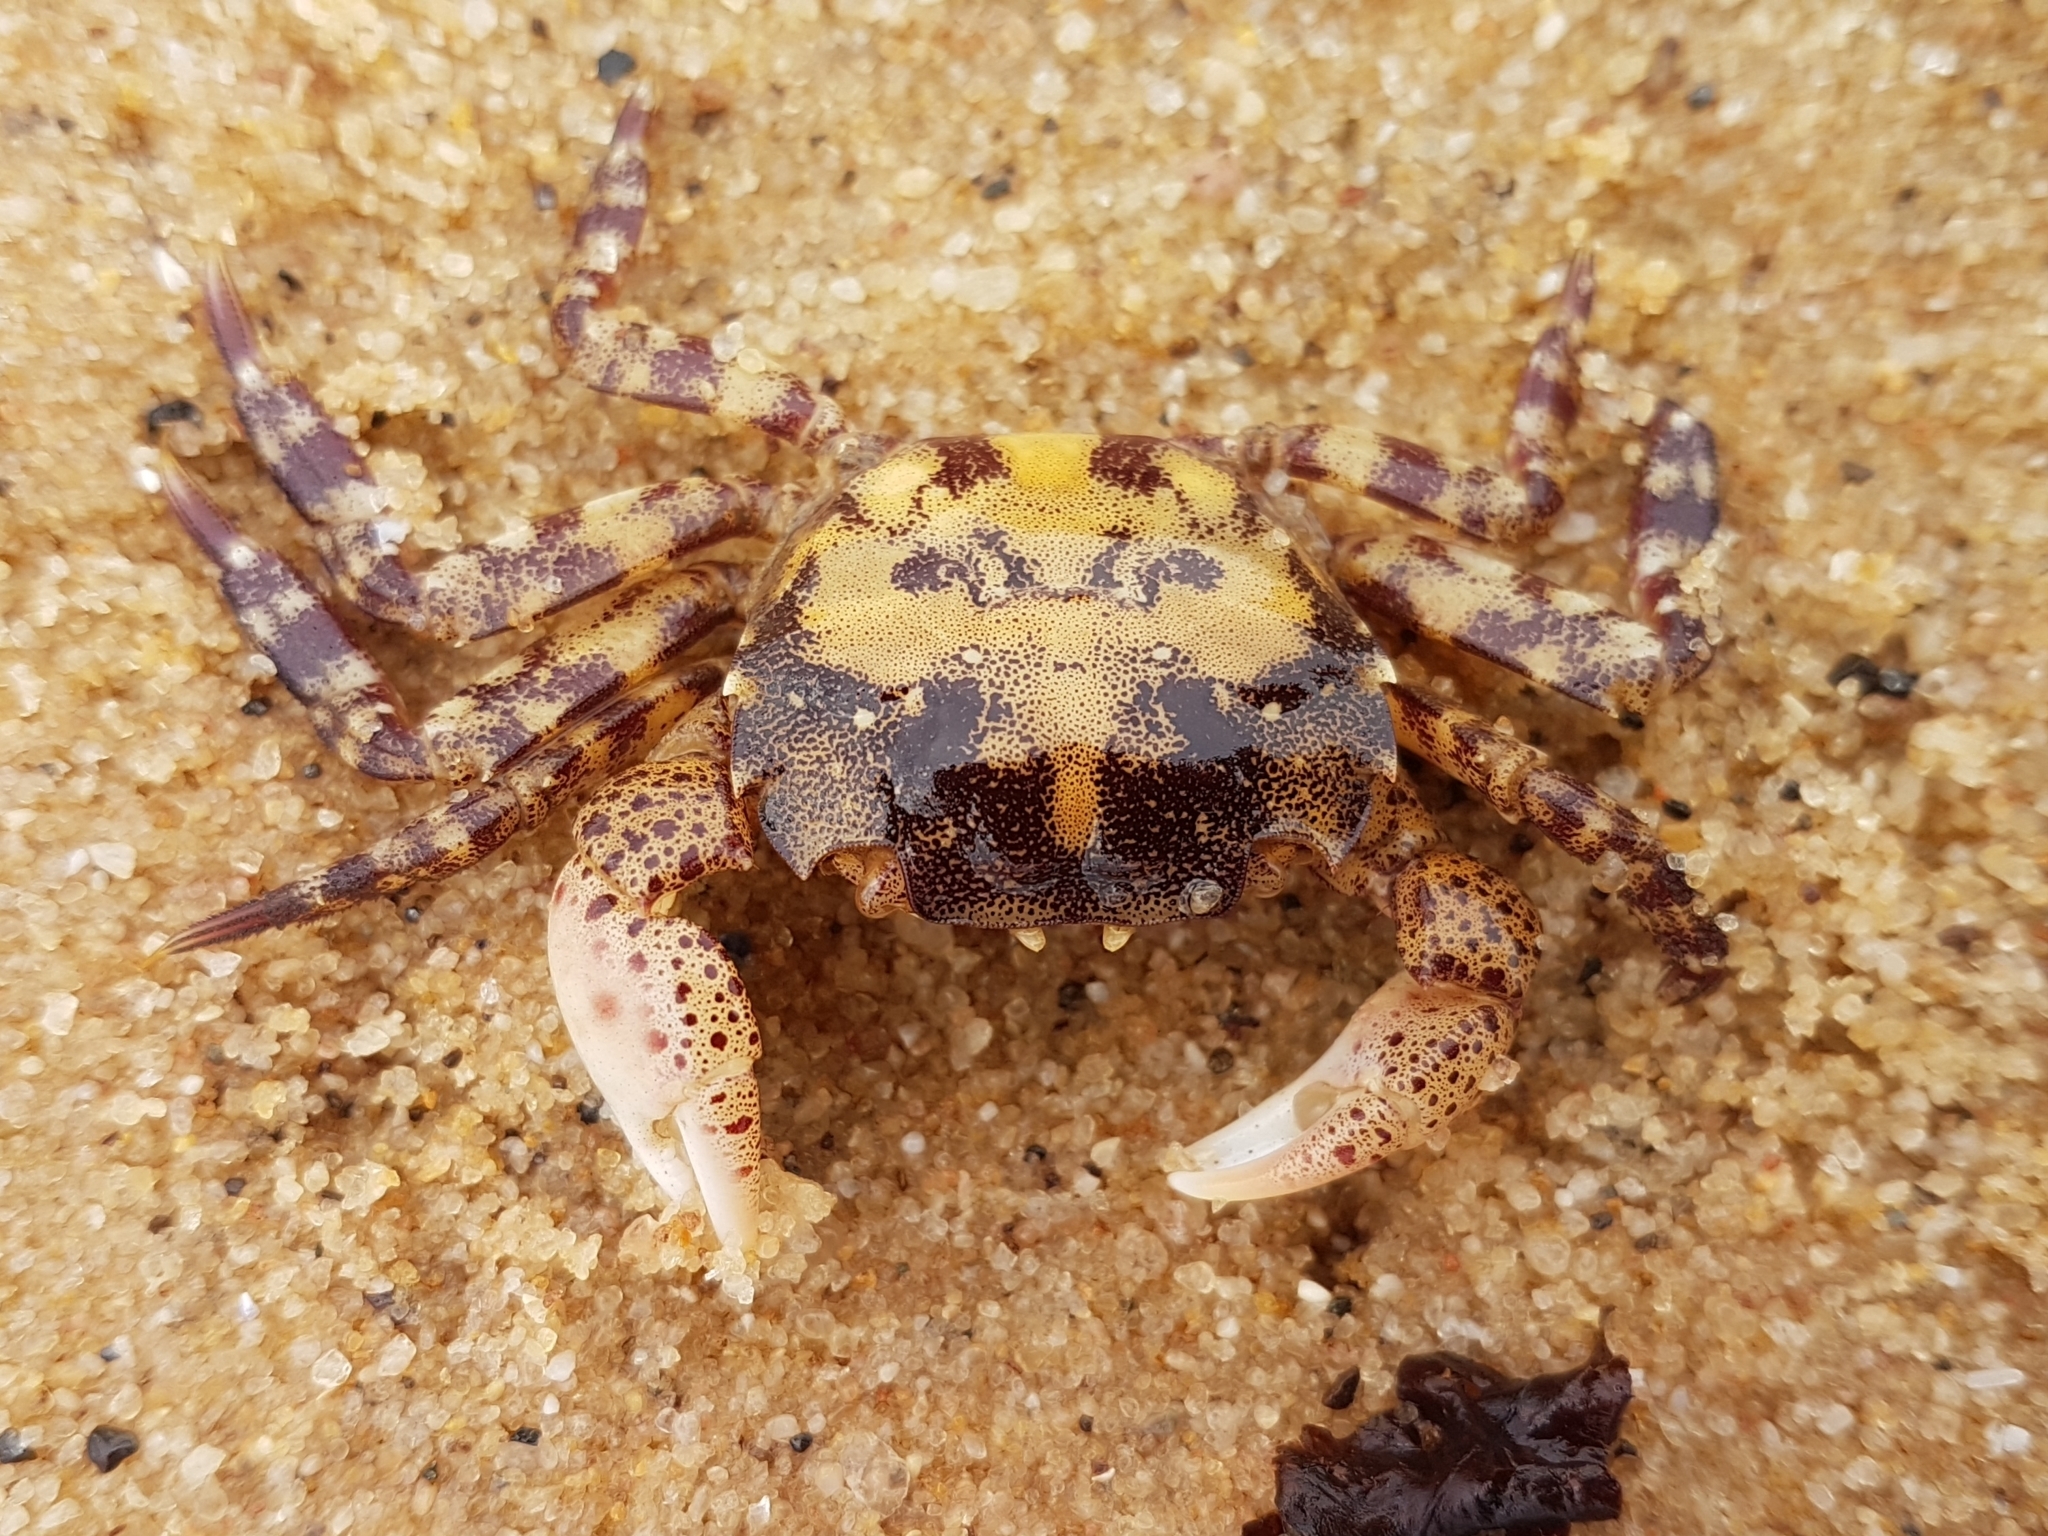 Asian Shore Crab (Hemigrapsus sanguineus) Photo Credit djurliv CC BY NC